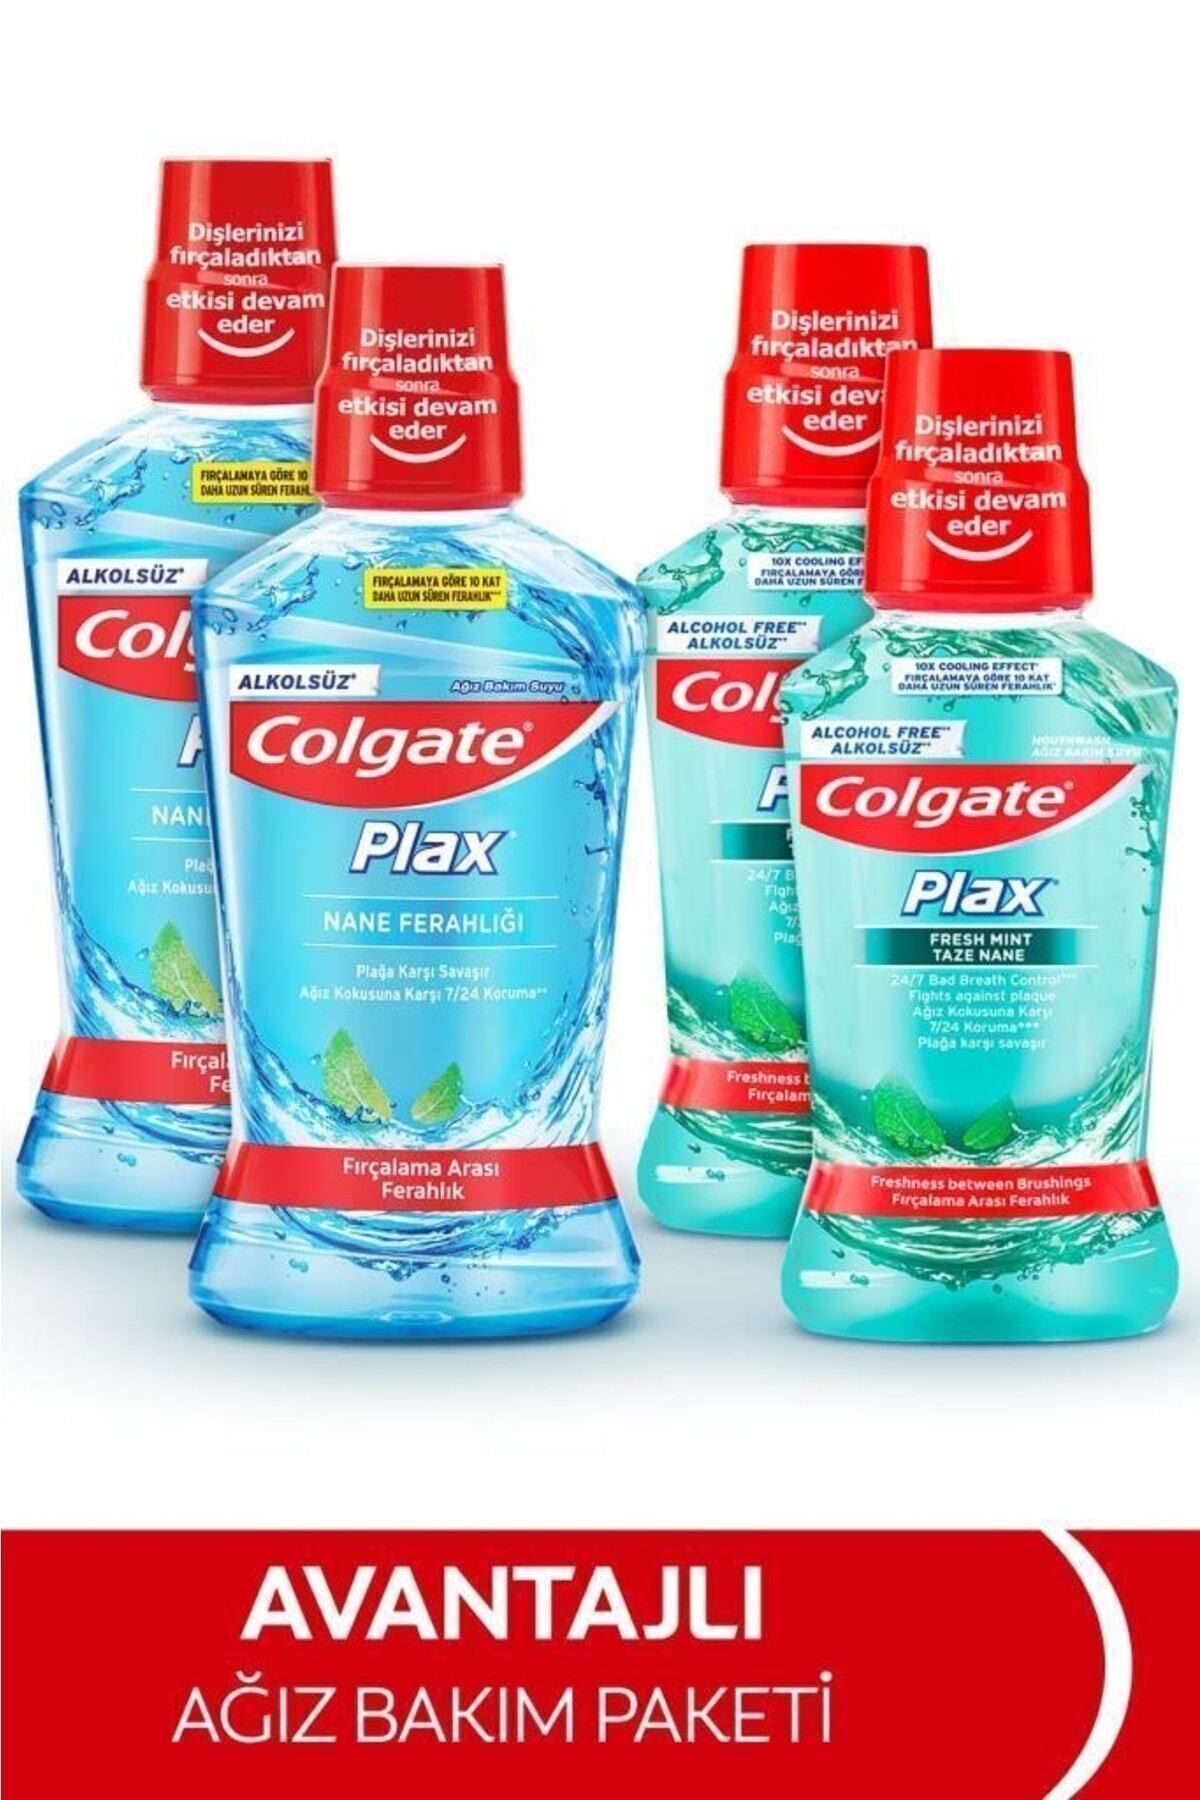 Colgate Plax Nane Ferahlığı Alkolsüz Ağız Bakım Suyu 500 ml Plax Taze Nane 250 ml X 2 Adet